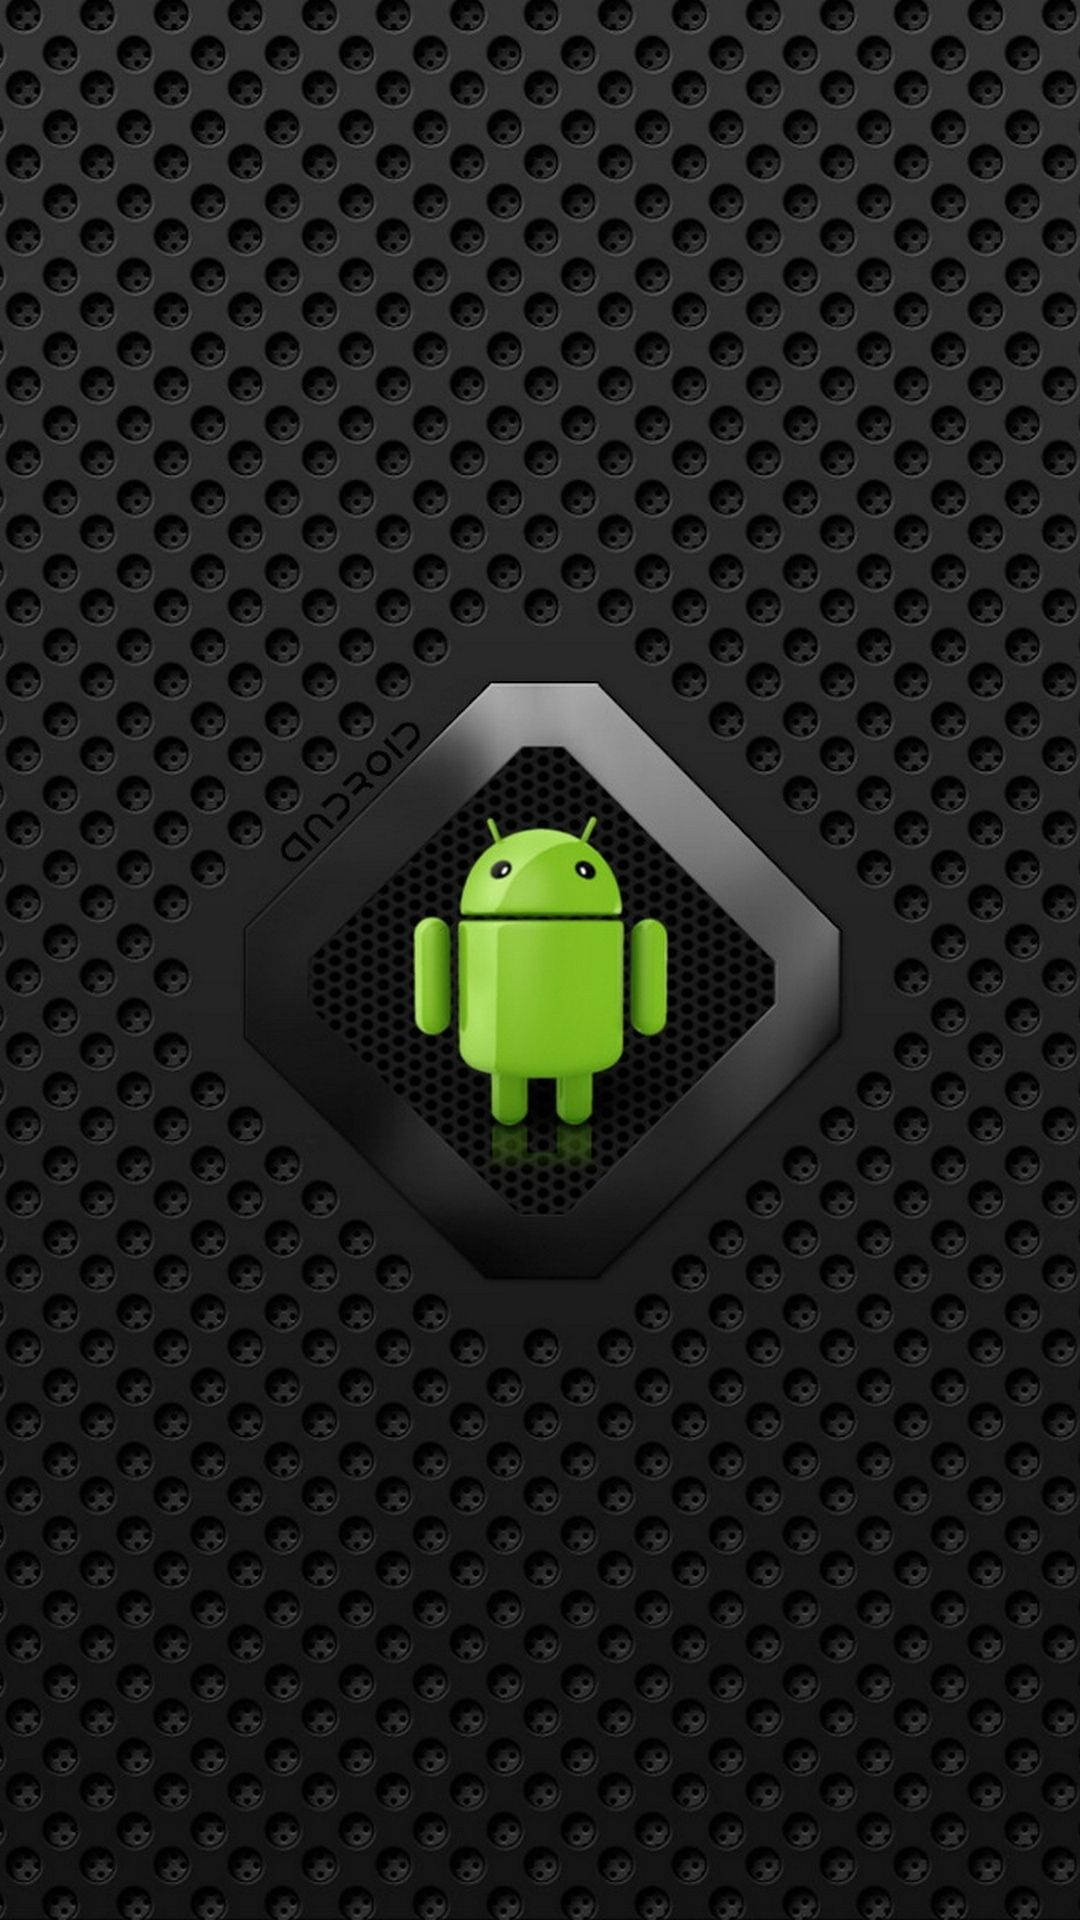 Androidentwickler Kreieren Innovative Mobile Anwendungen. Wallpaper